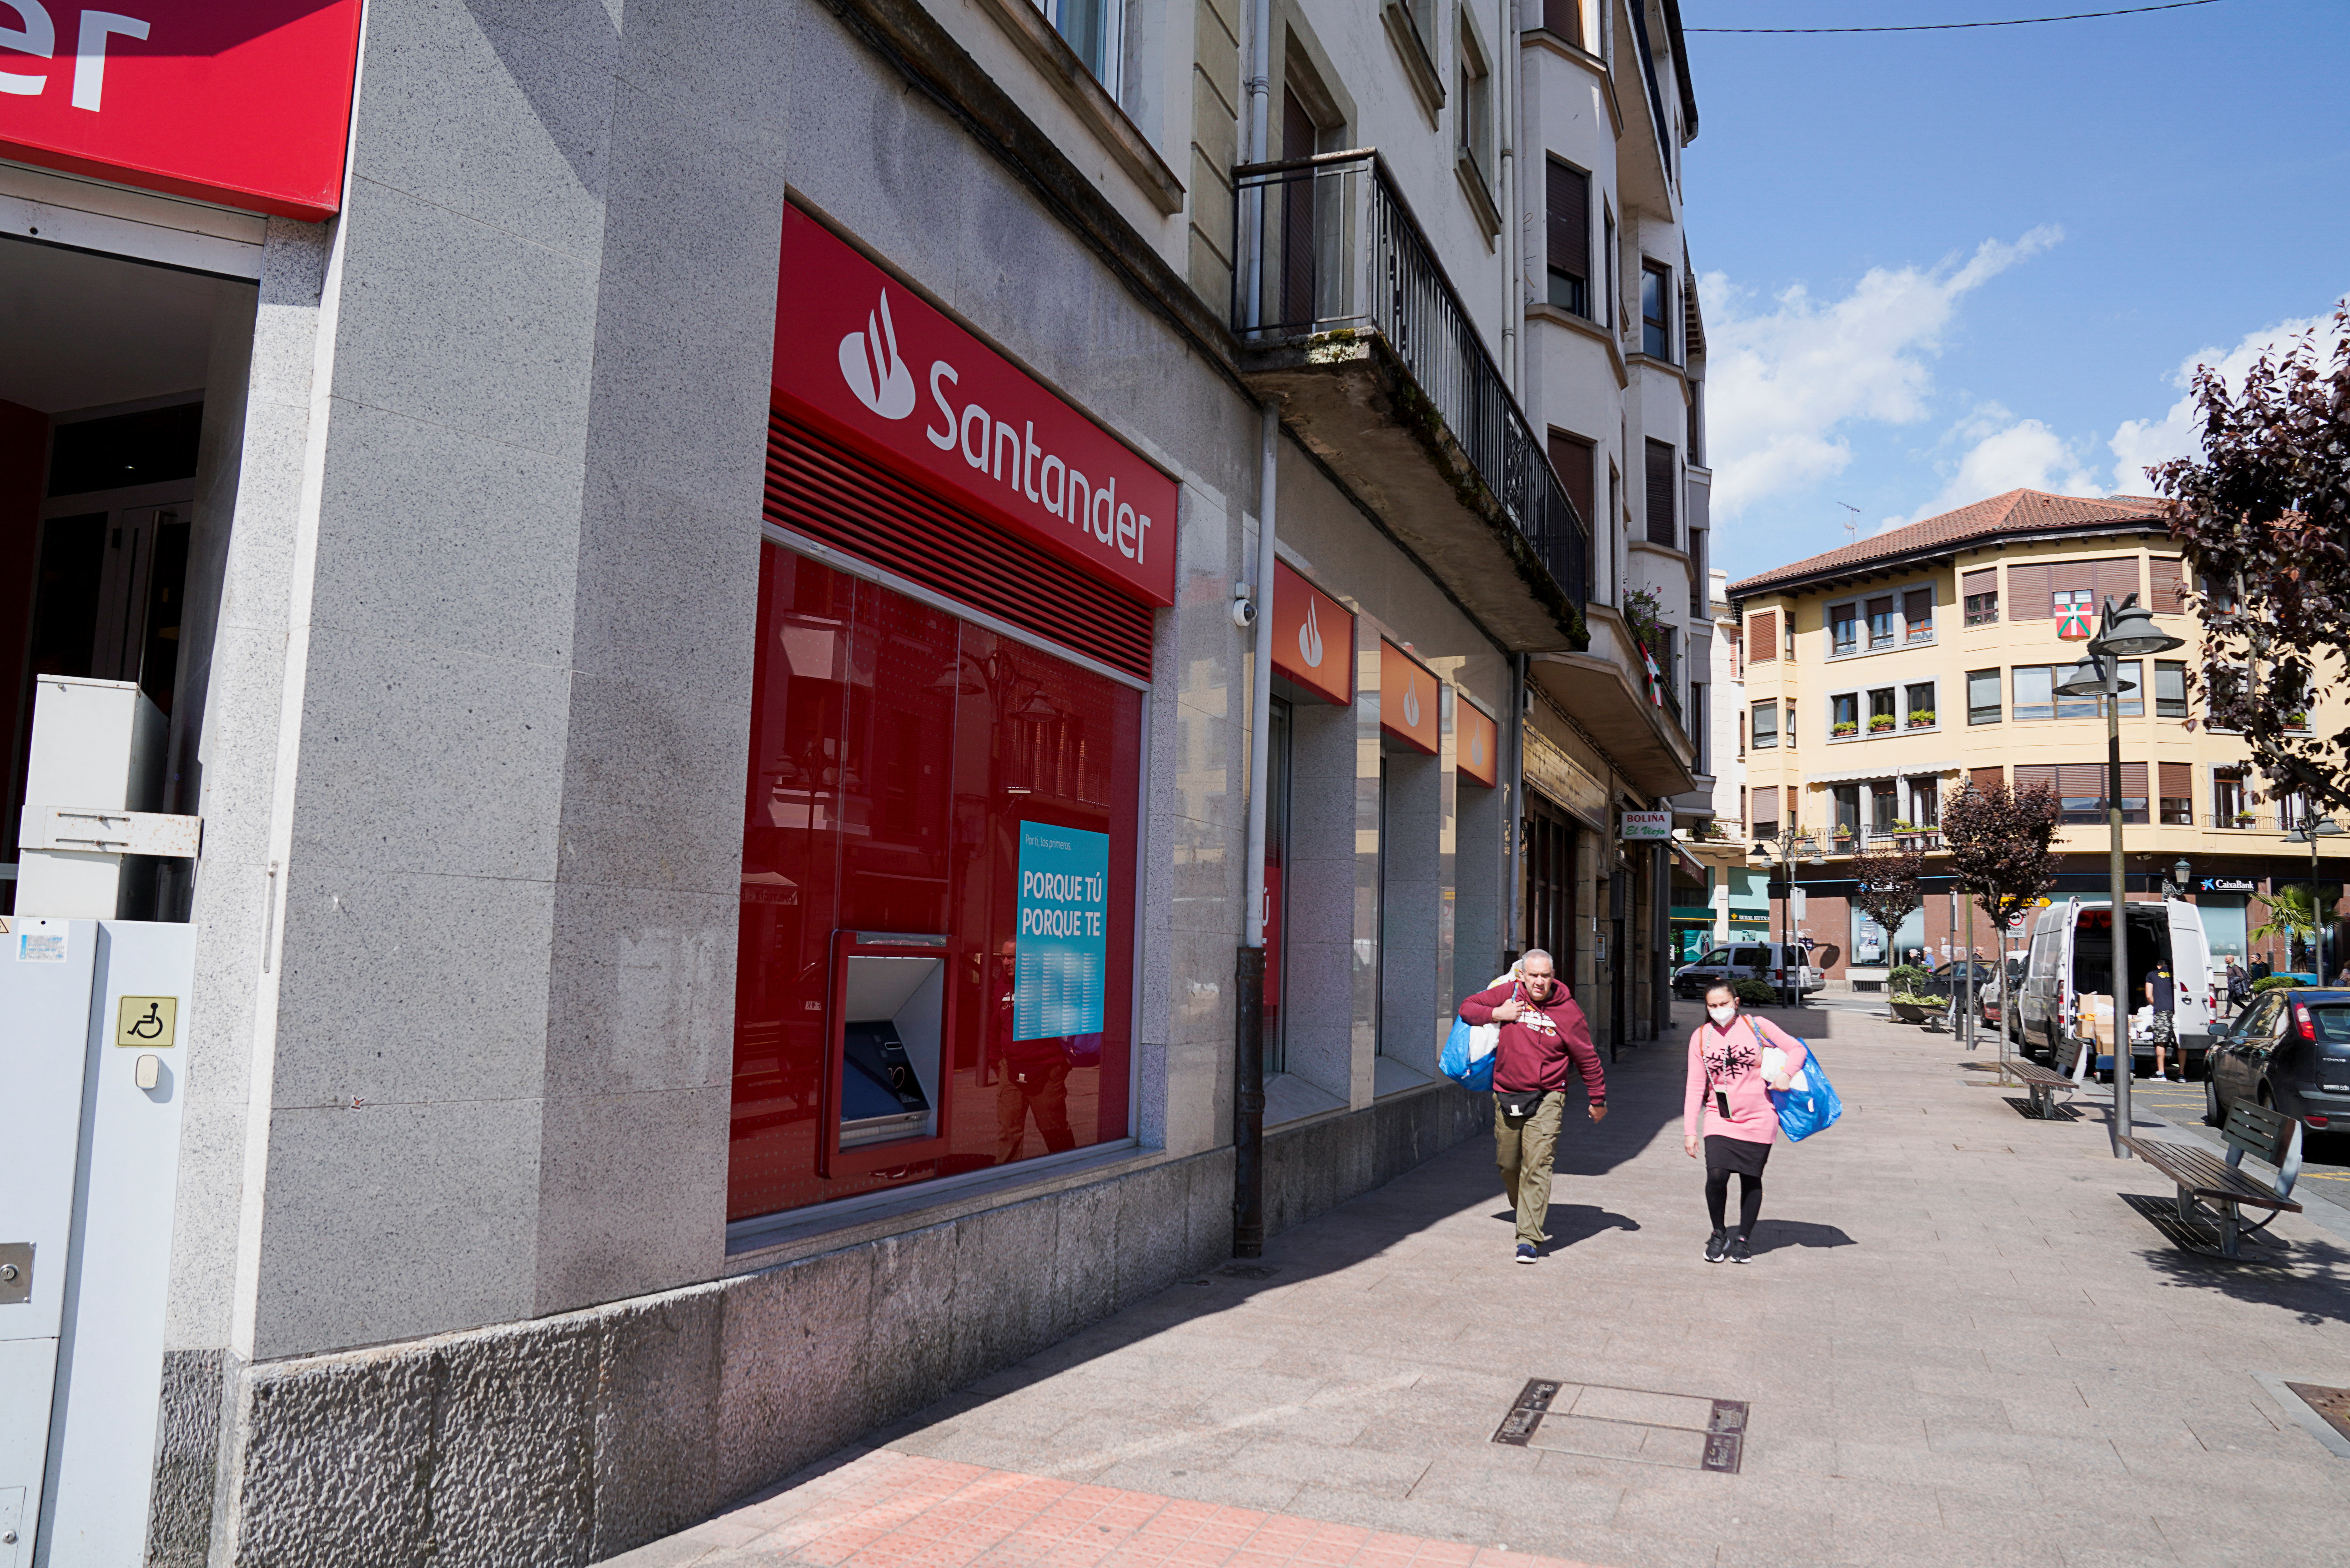 Santander - Getnet